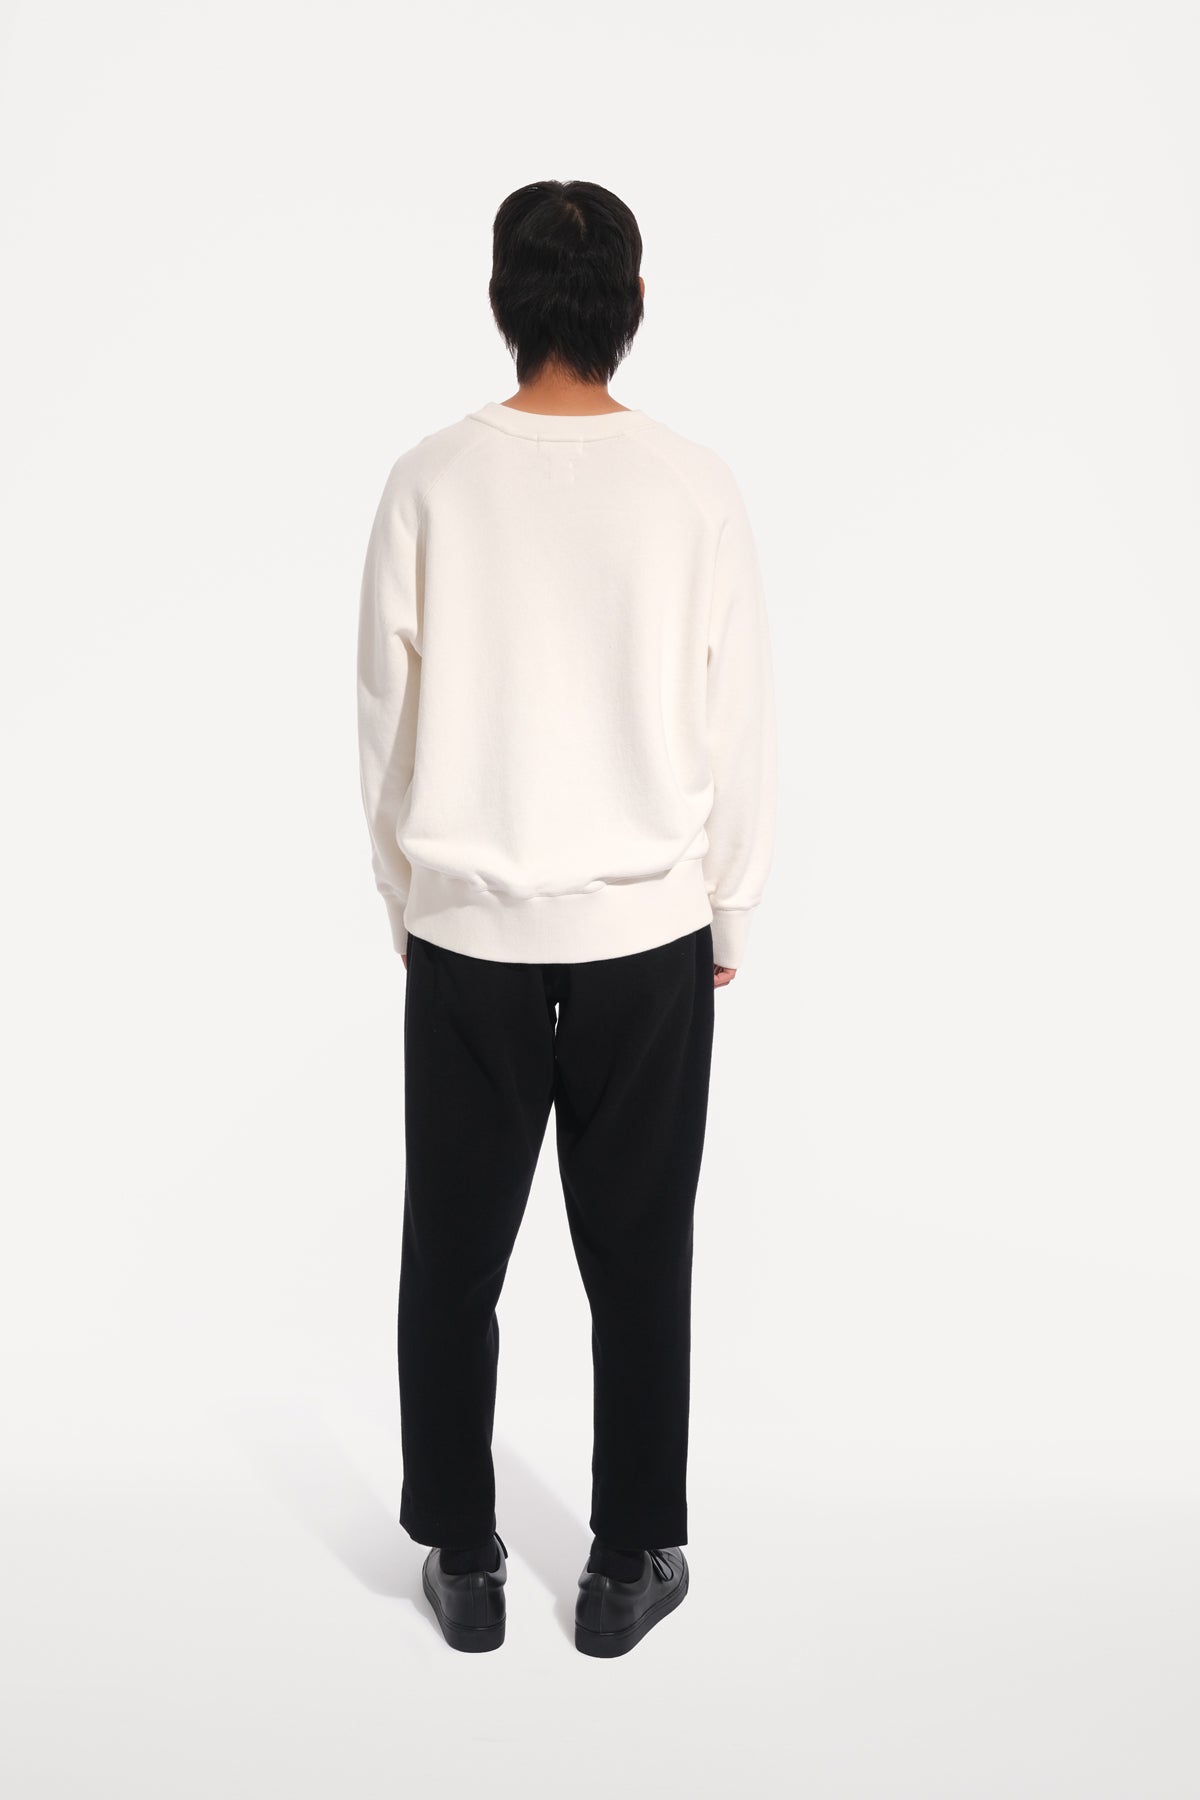 oftt - 02- heavyweight sweatshirt - natural white - organic cotton fleece - image 6